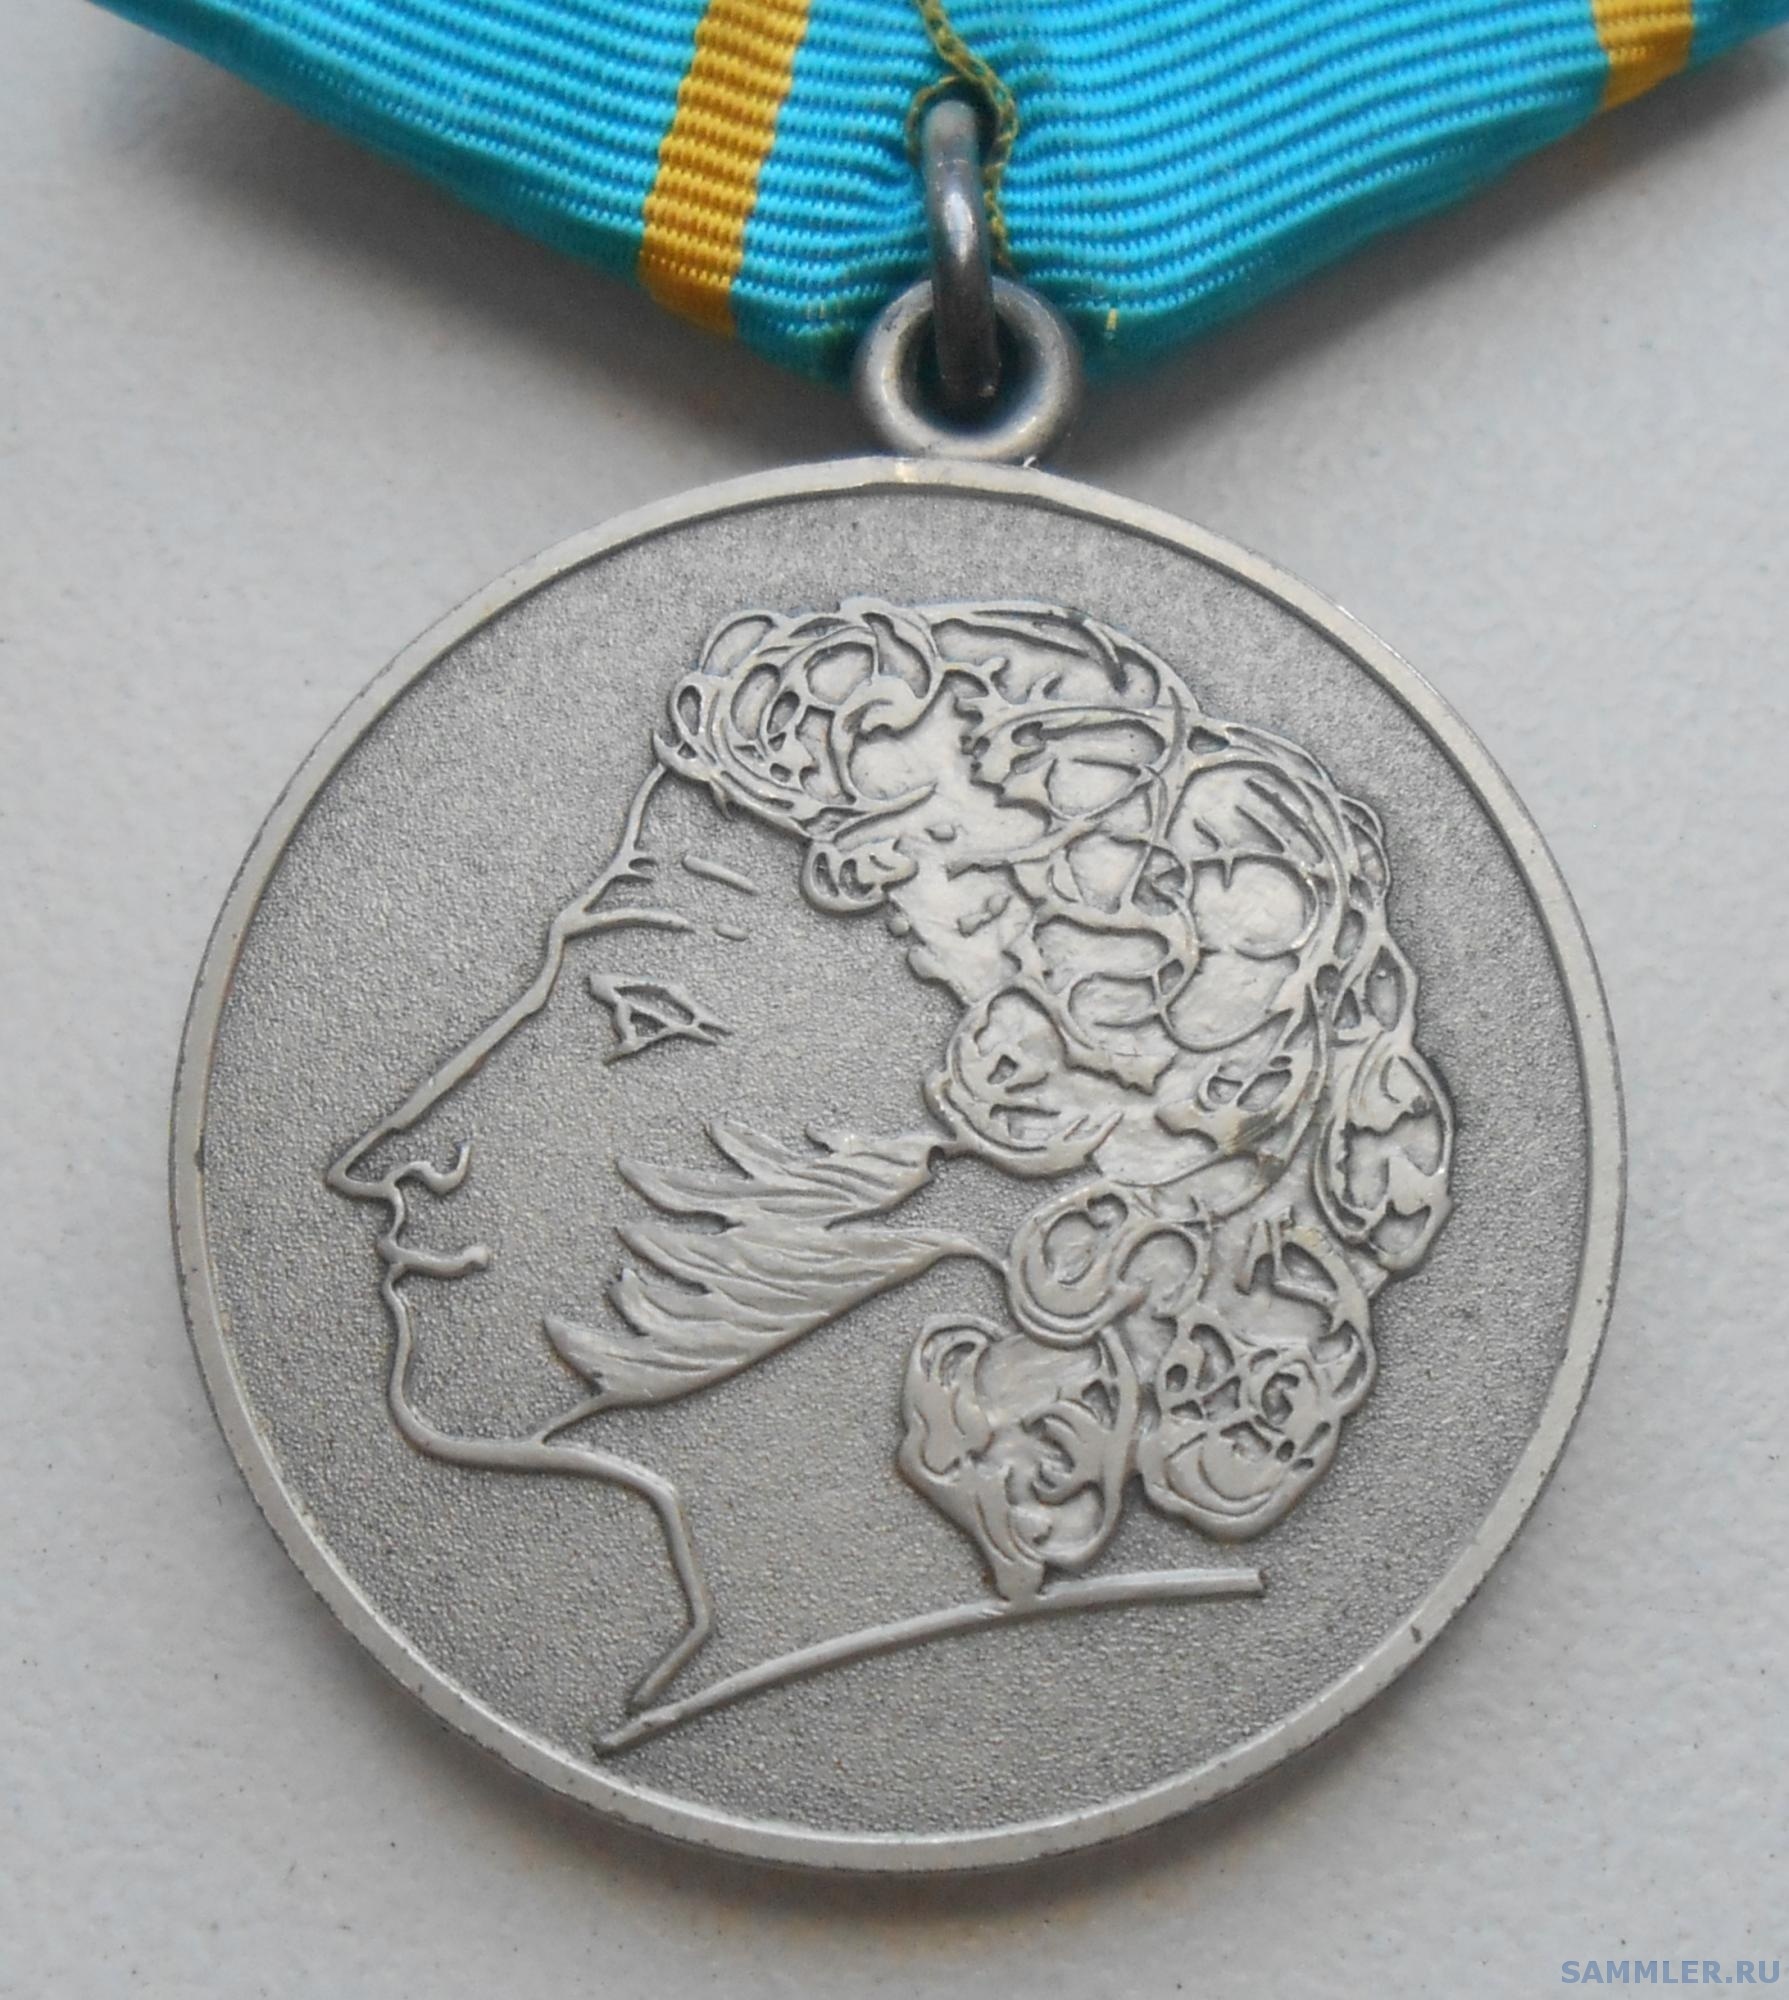 DSCN0649 Медаль Пушкина.JPG